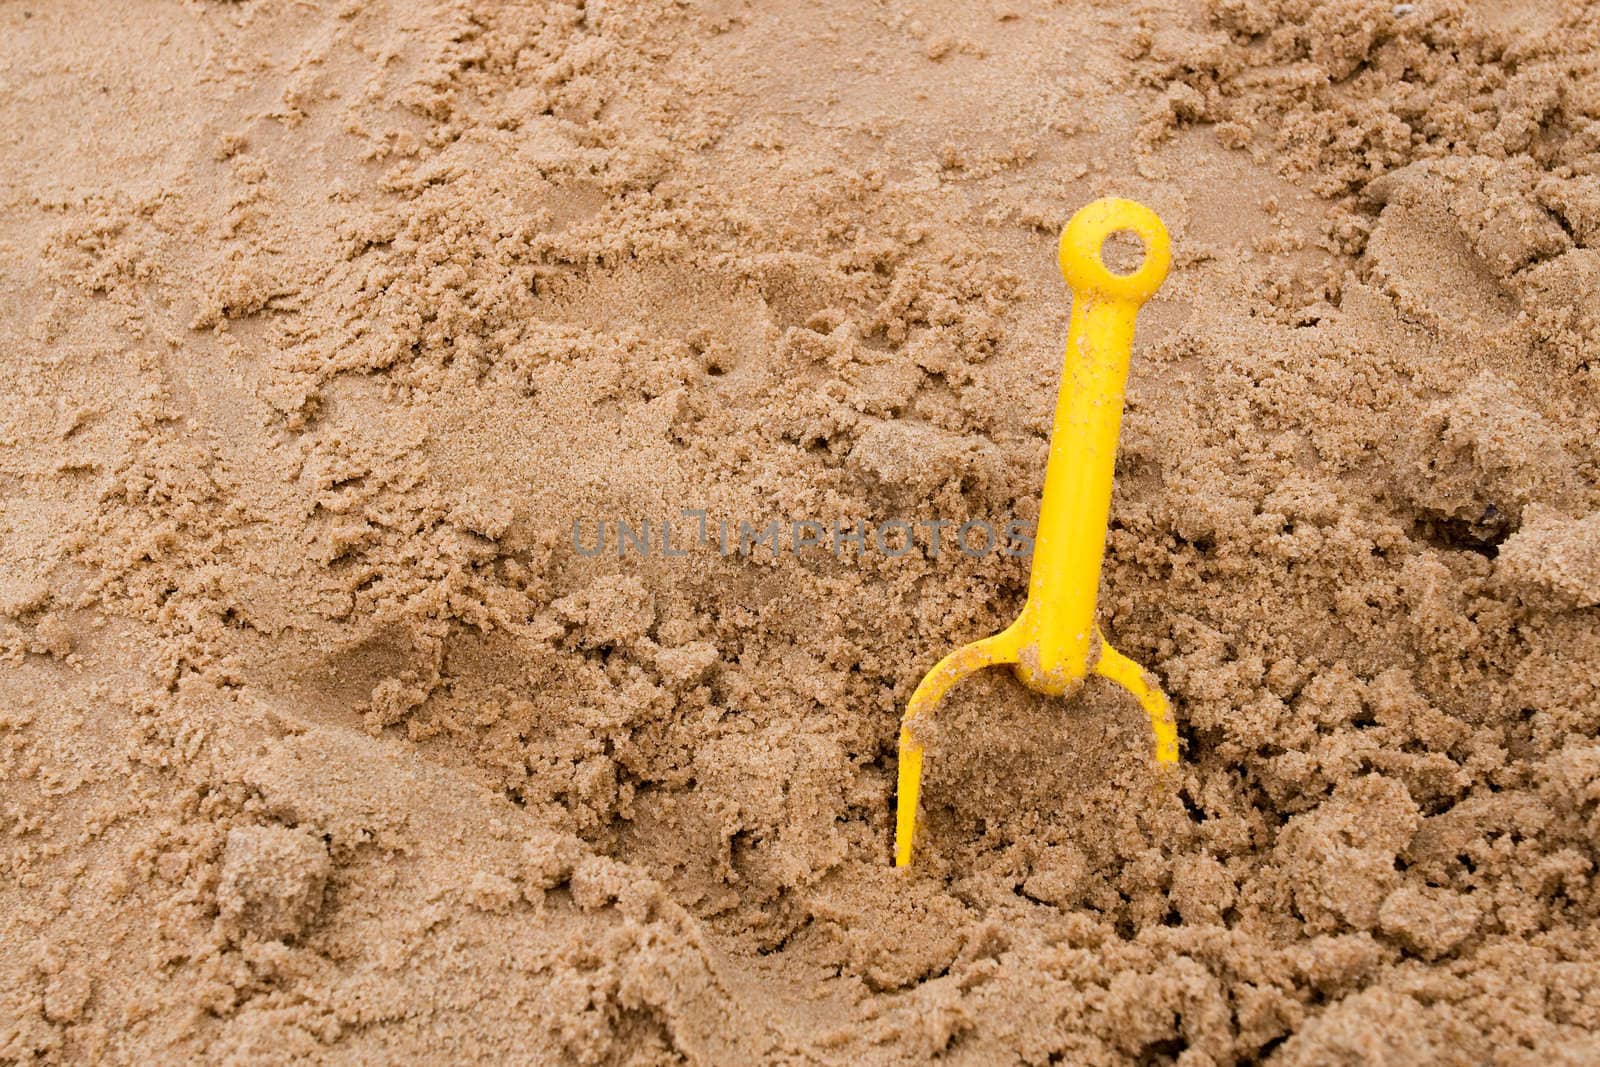 Forgoten yellow sand spade in sandy beach